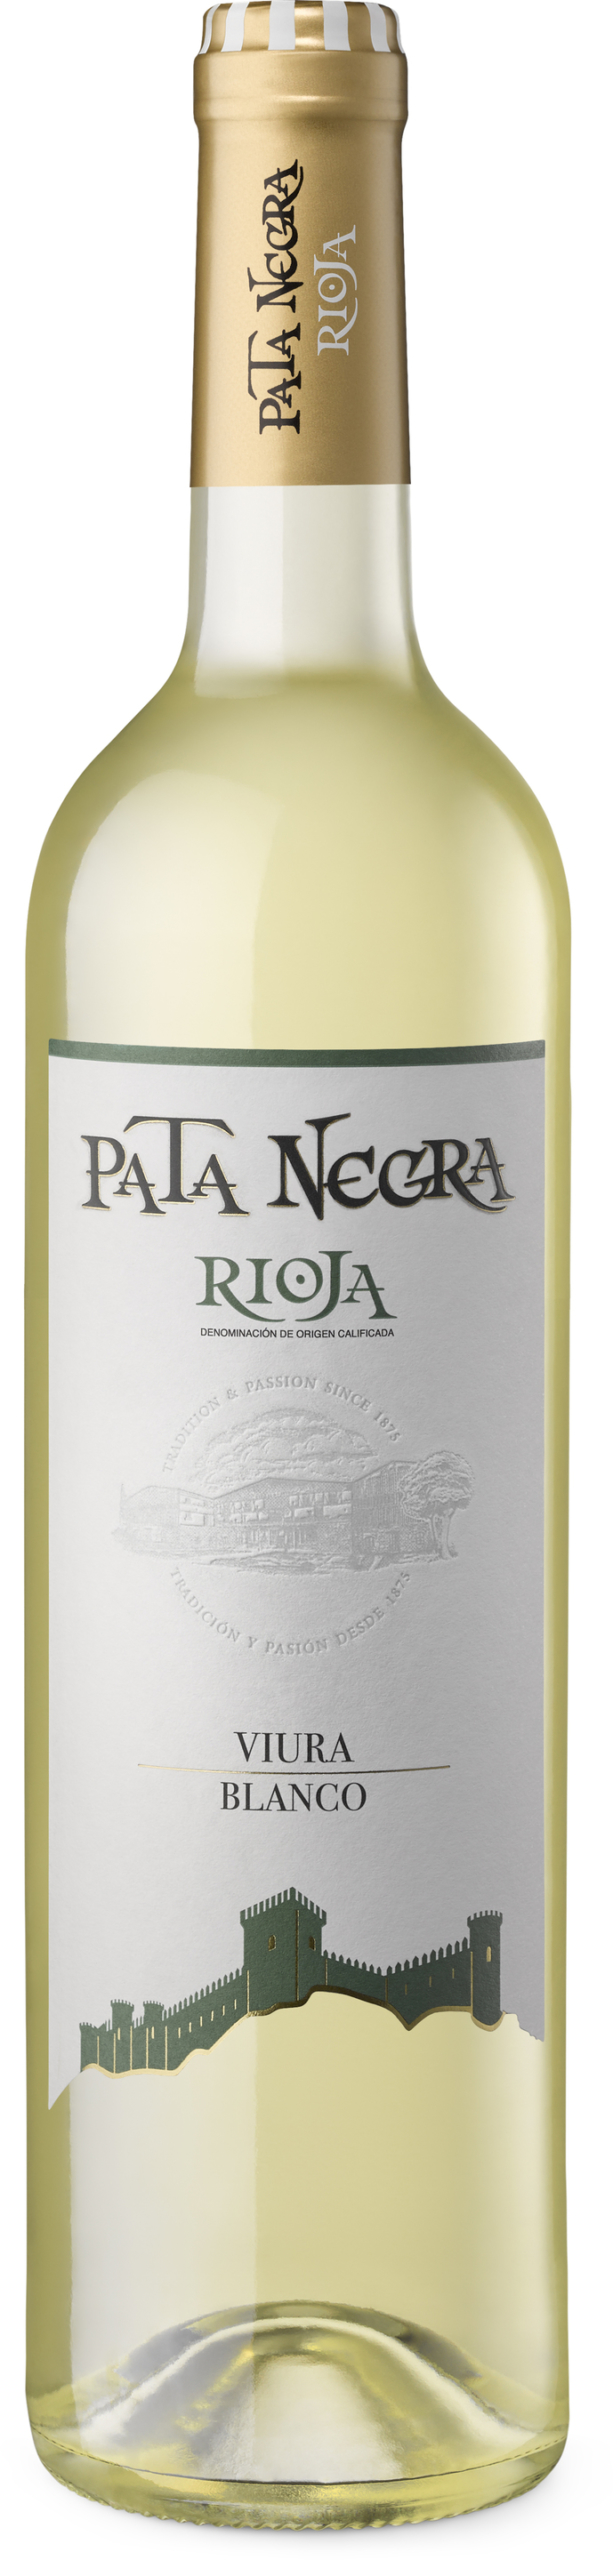 Wine Pata Negra Gran Seleccion Rioja A on